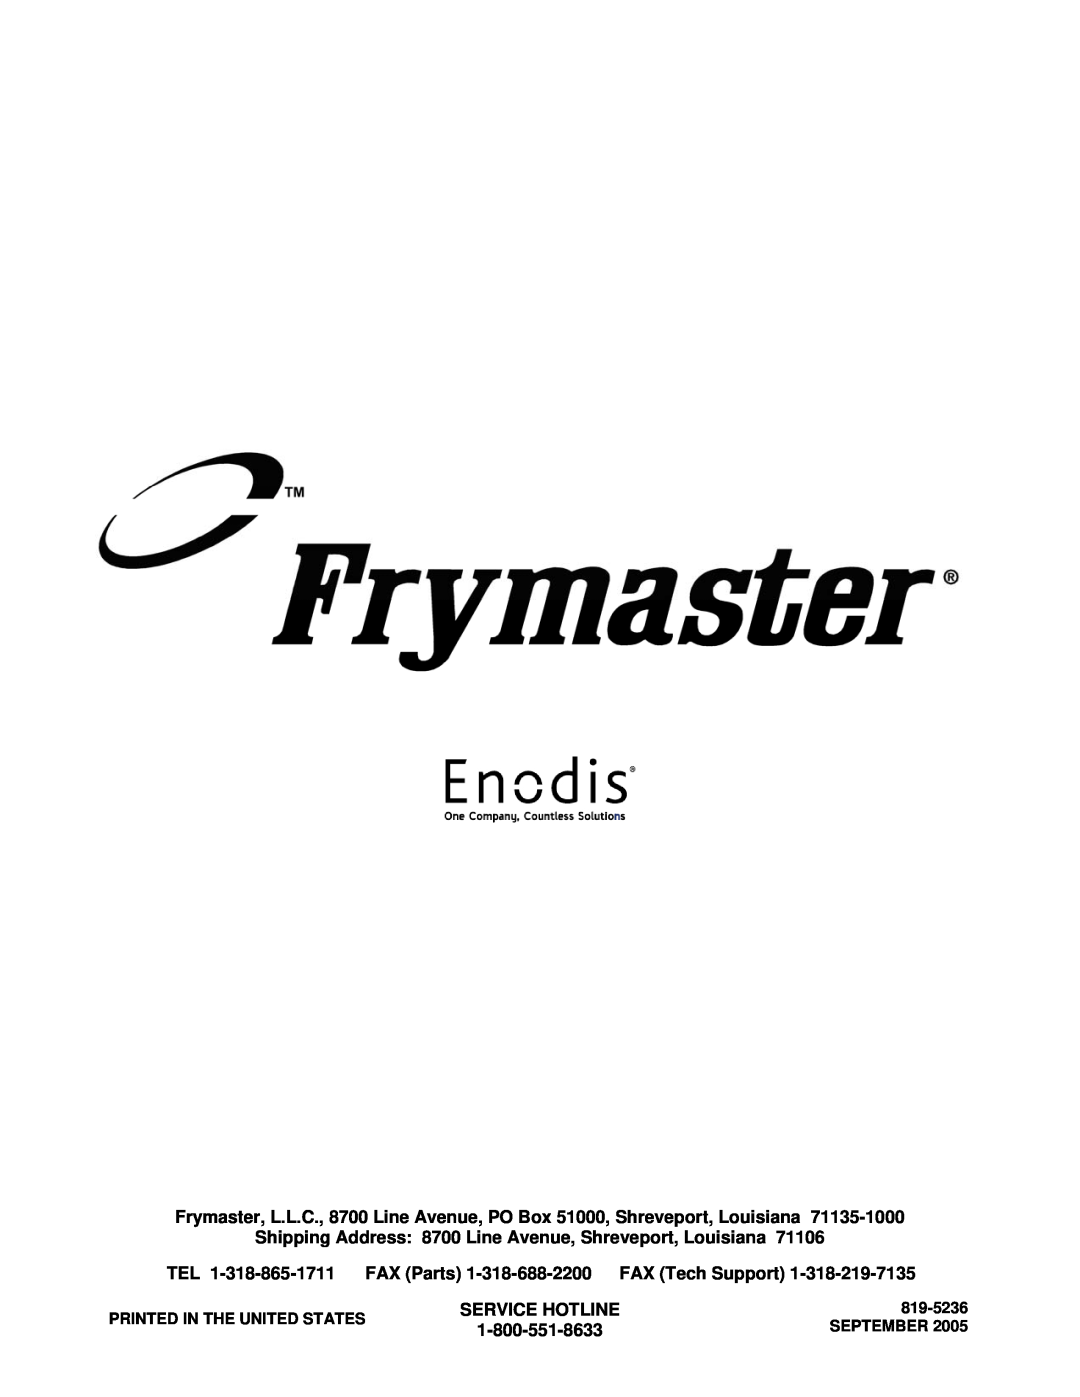 Frymaster MSDU Shipping Address 8700 Line Avenue, Shreveport, Louisiana, Service Hotline, 819-5236, September 